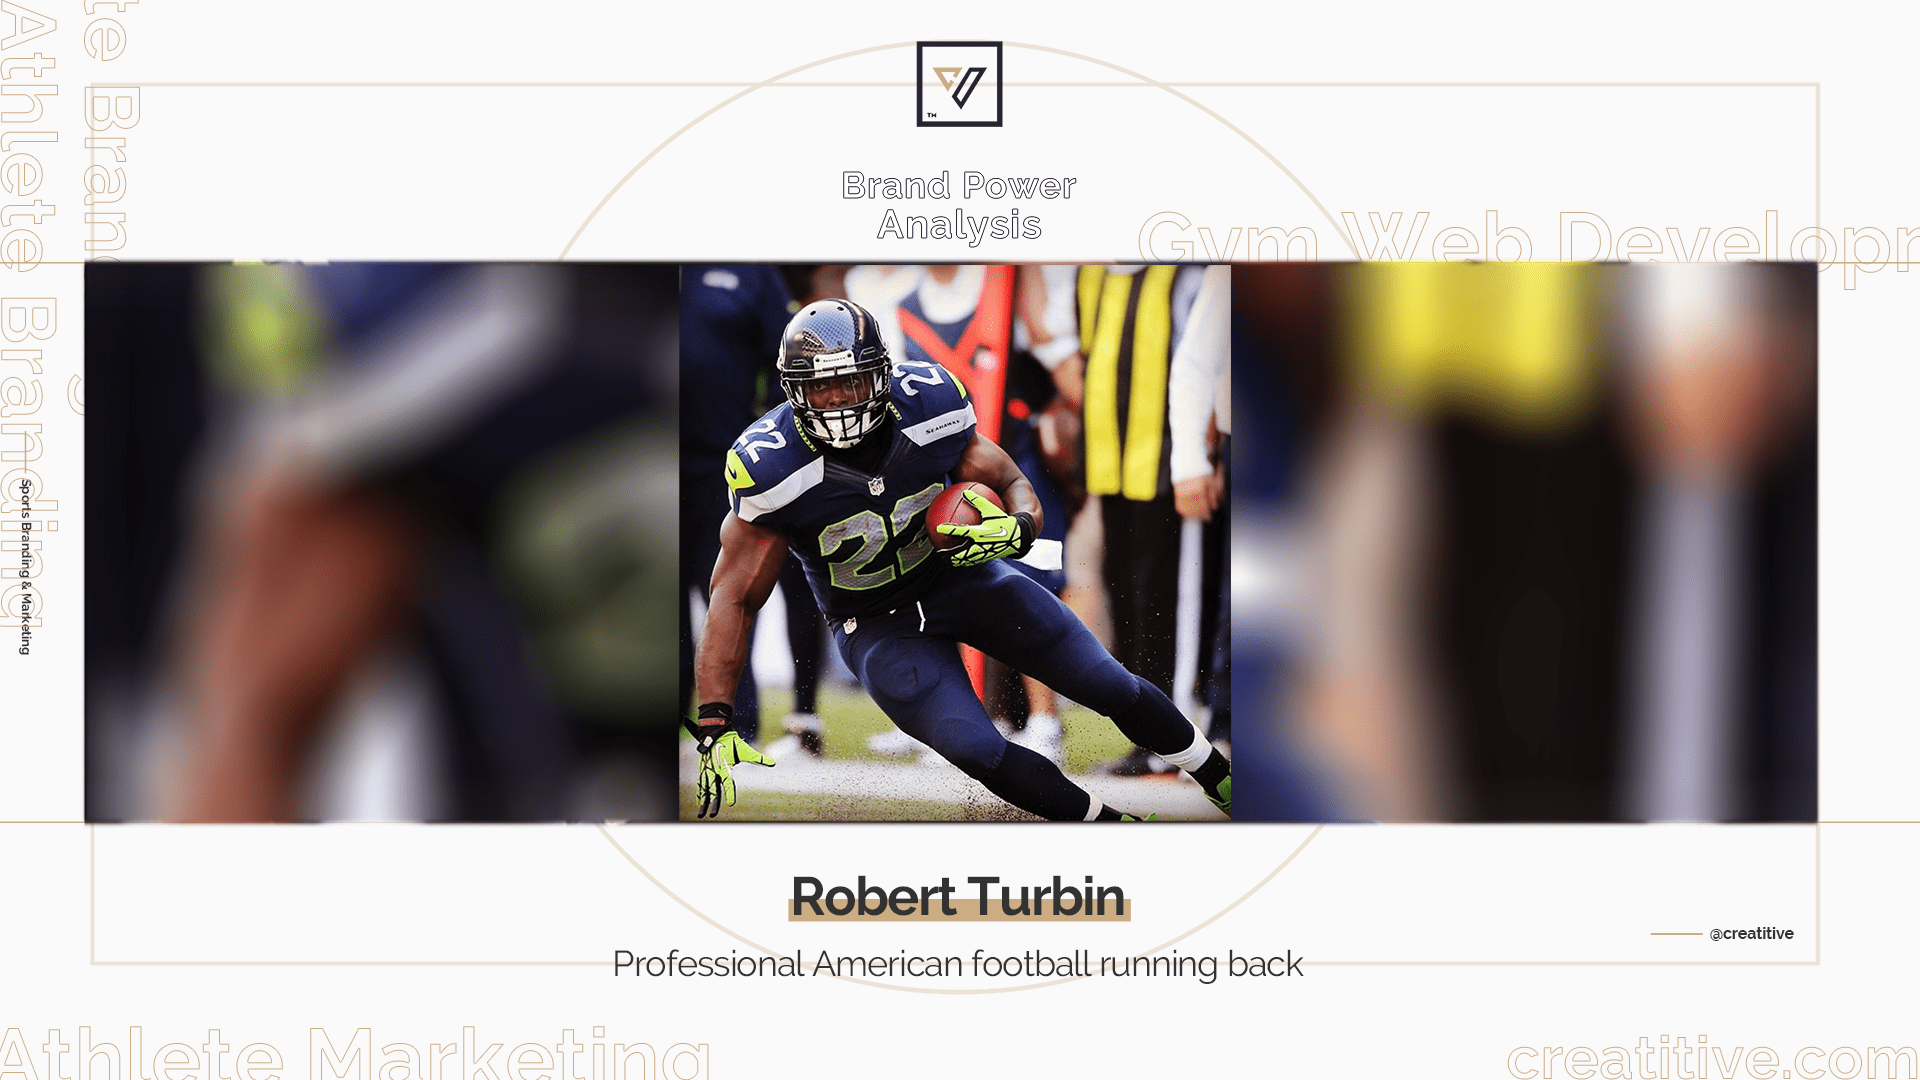 Brand Power Analysis: NFL RB Robert Turbin